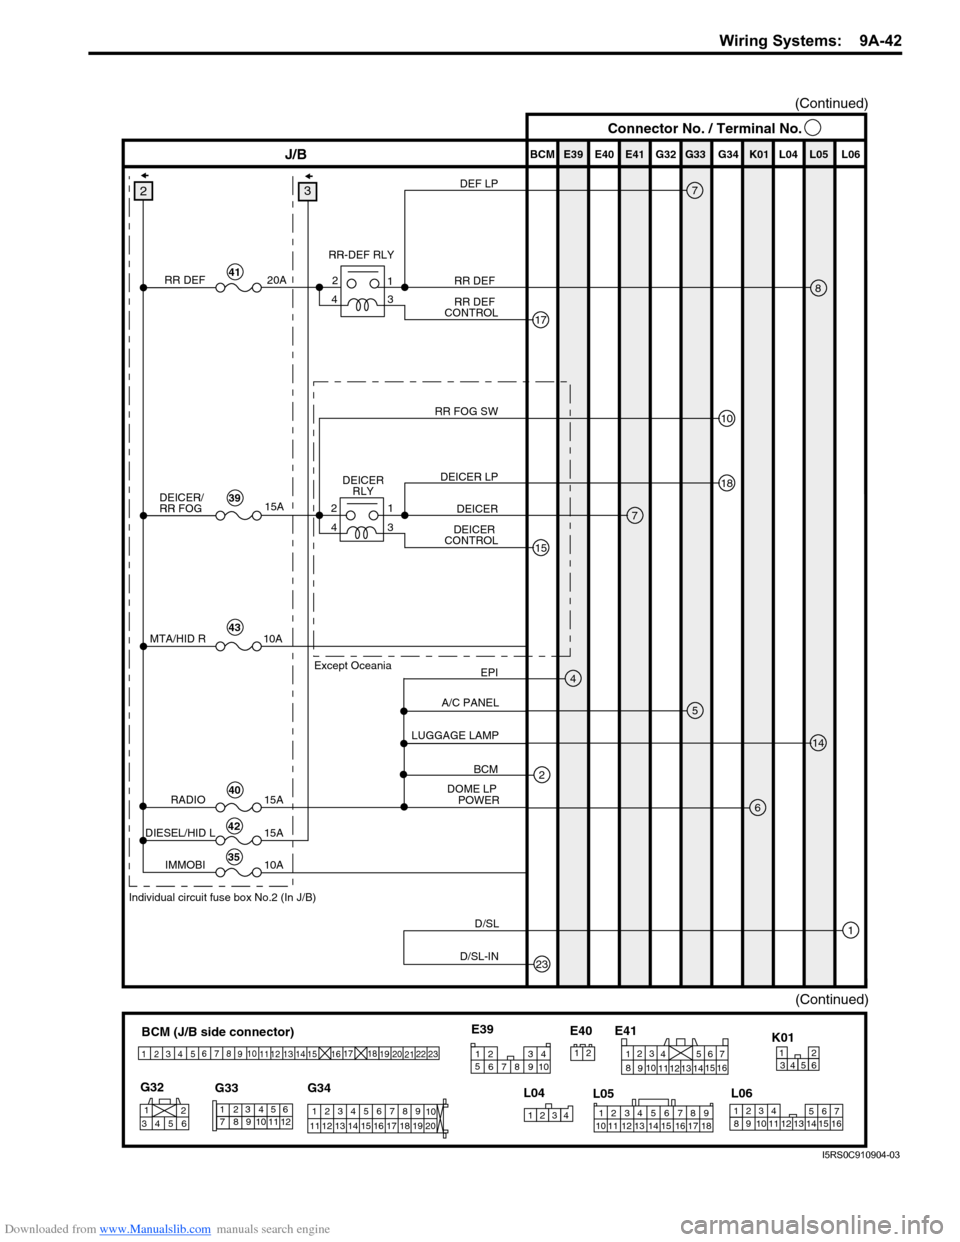 SUZUKI SWIFT 2005 2.G Service Workshop Manual Downloaded from www.Manualslib.com manuals search engine Wiring Systems:  9A-42
E39 E41E40
BCM G34G33G32 K01 L04 L05 L06J/B
7
17
8
5
4
14
2
23
1
6
3
(Continued)
DEF LP
RR DEF 
RR DEF 
CONTROL
RR-DEF R